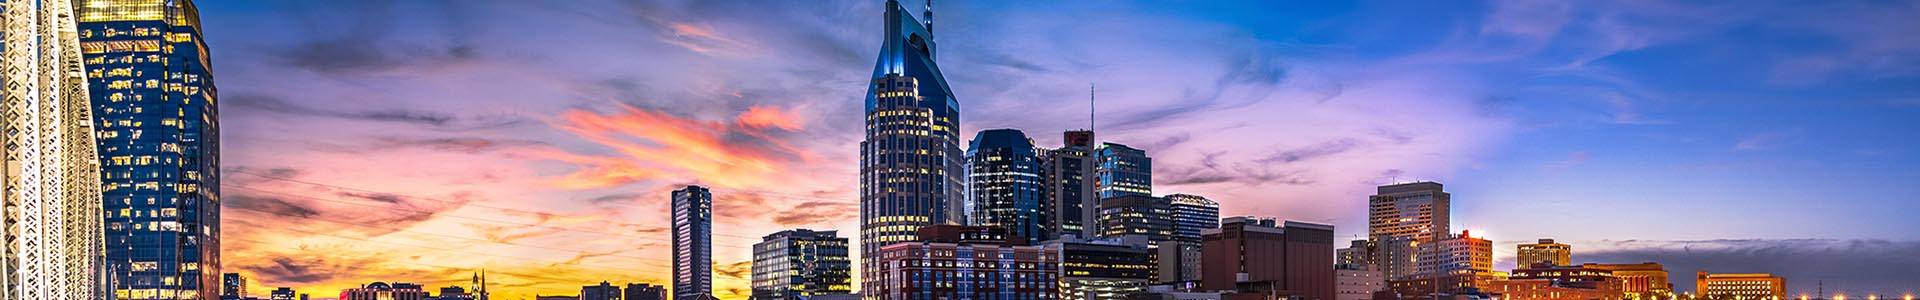 IRR-Nashville Career Opportunities
